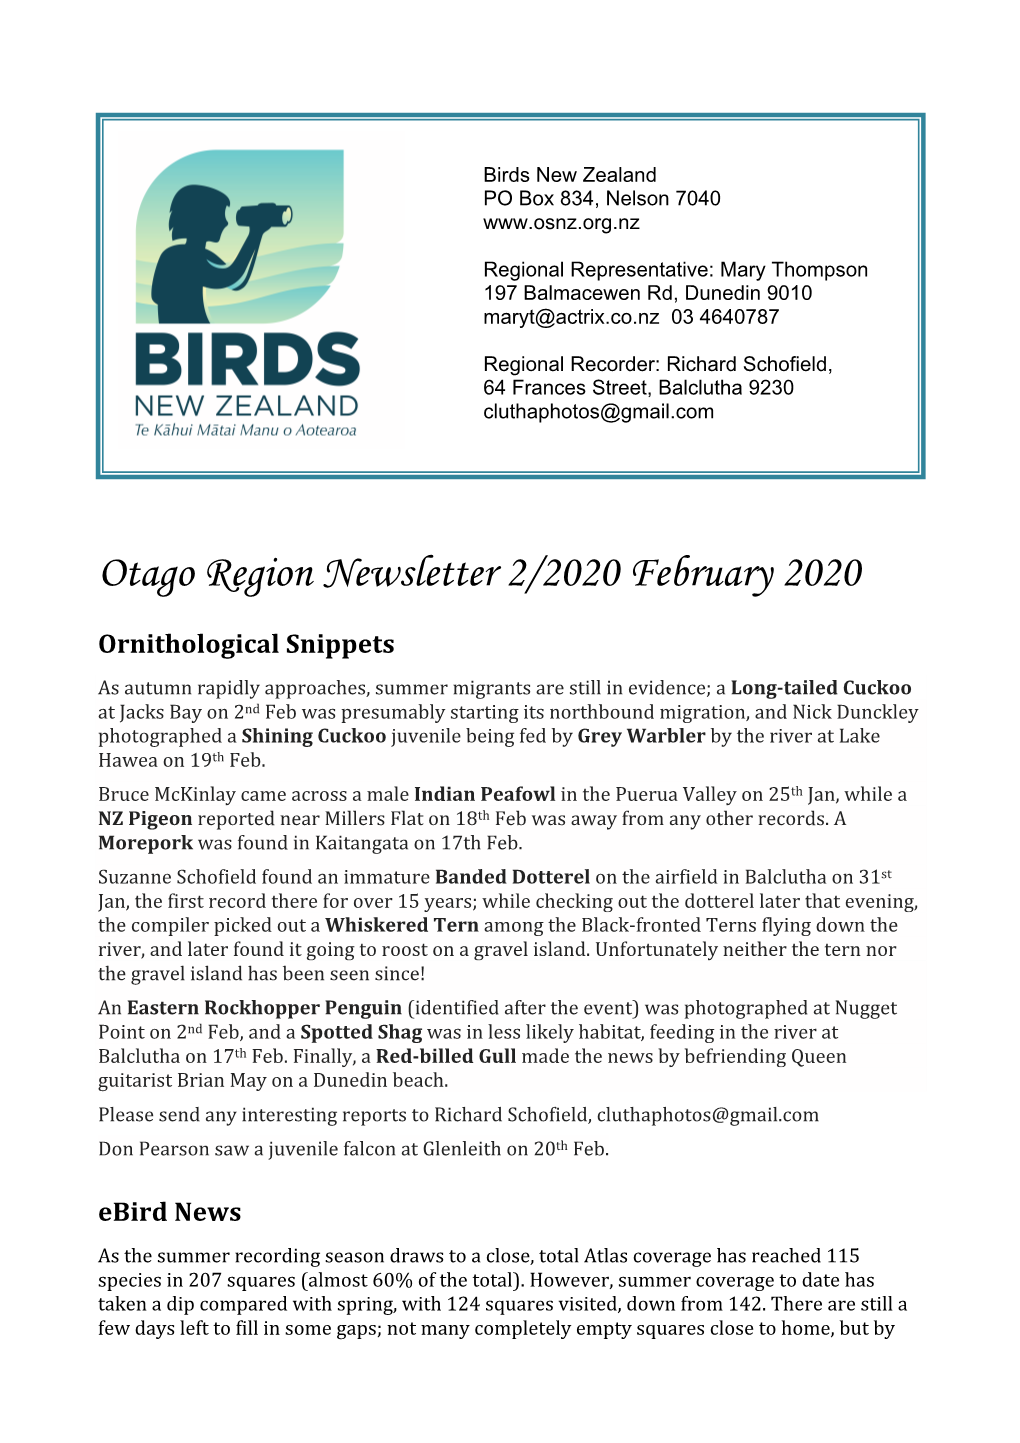 Otago Region Newsletter 2/2020 February 2020